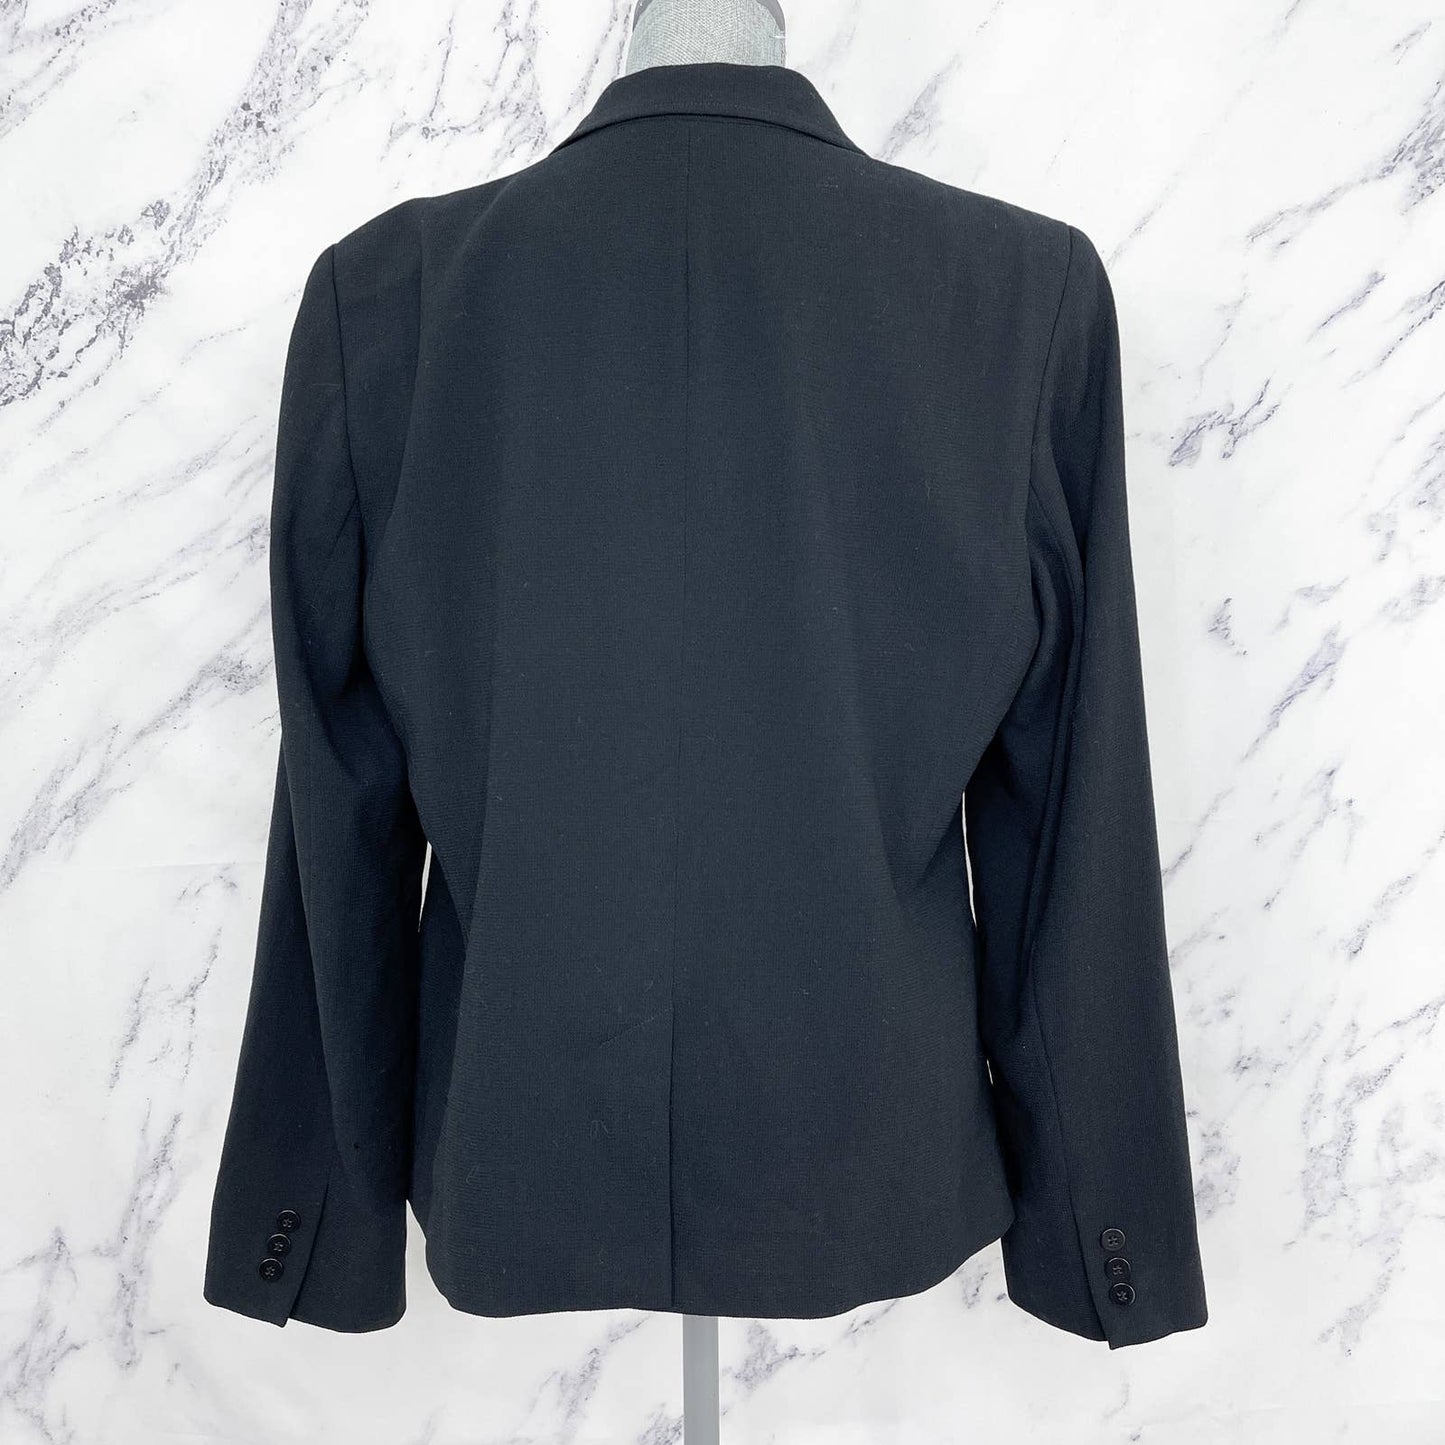 Emanuel Ungaro | Black Wool Classic Blazer/Suit Coat | Sz 14